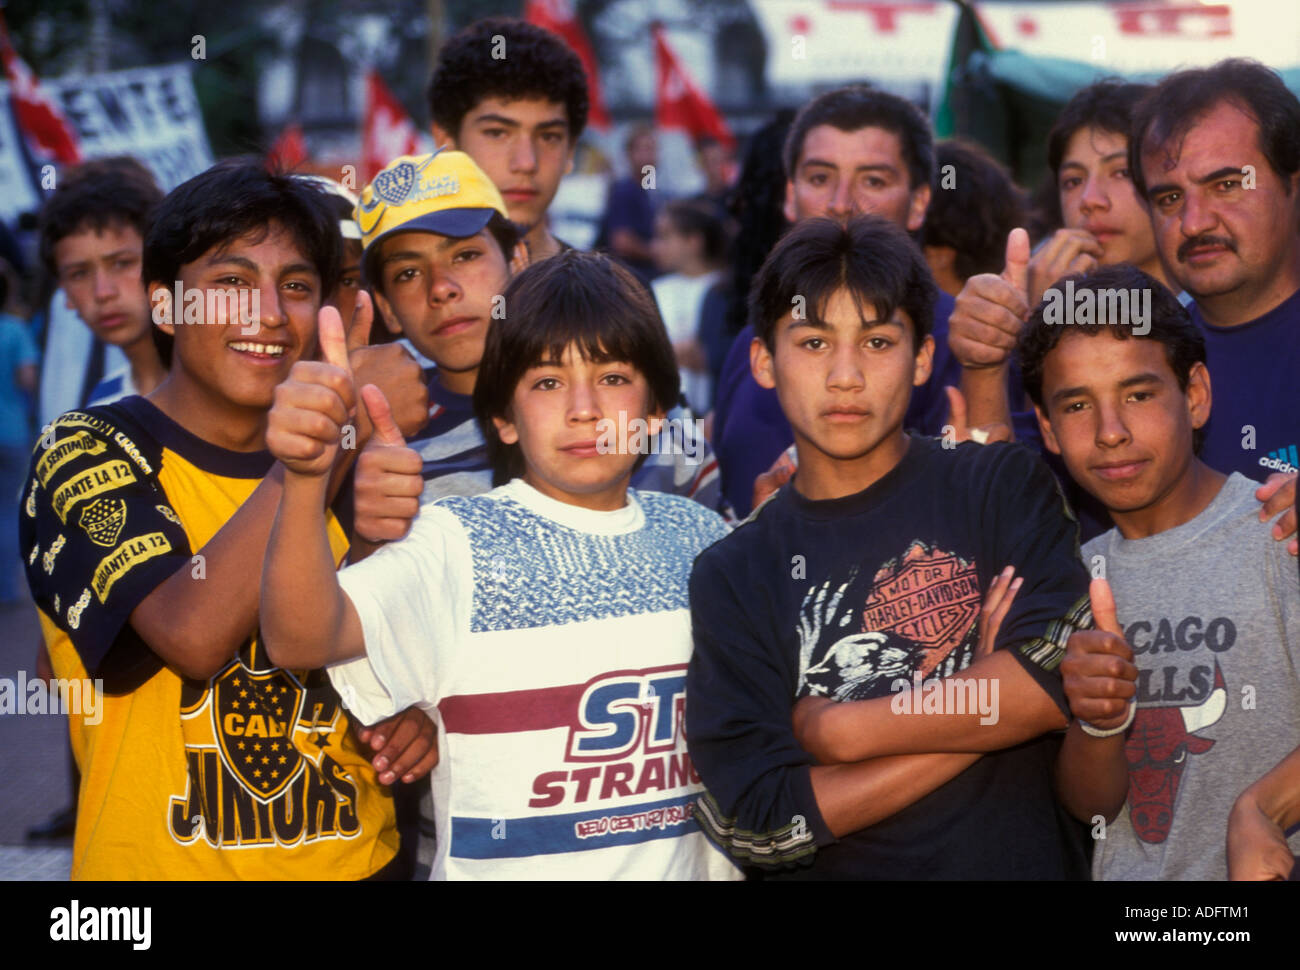 Ragazzi adolescenti, maschio teens, Plaza de Mayo, Buenos Aires, Argentina Foto Stock